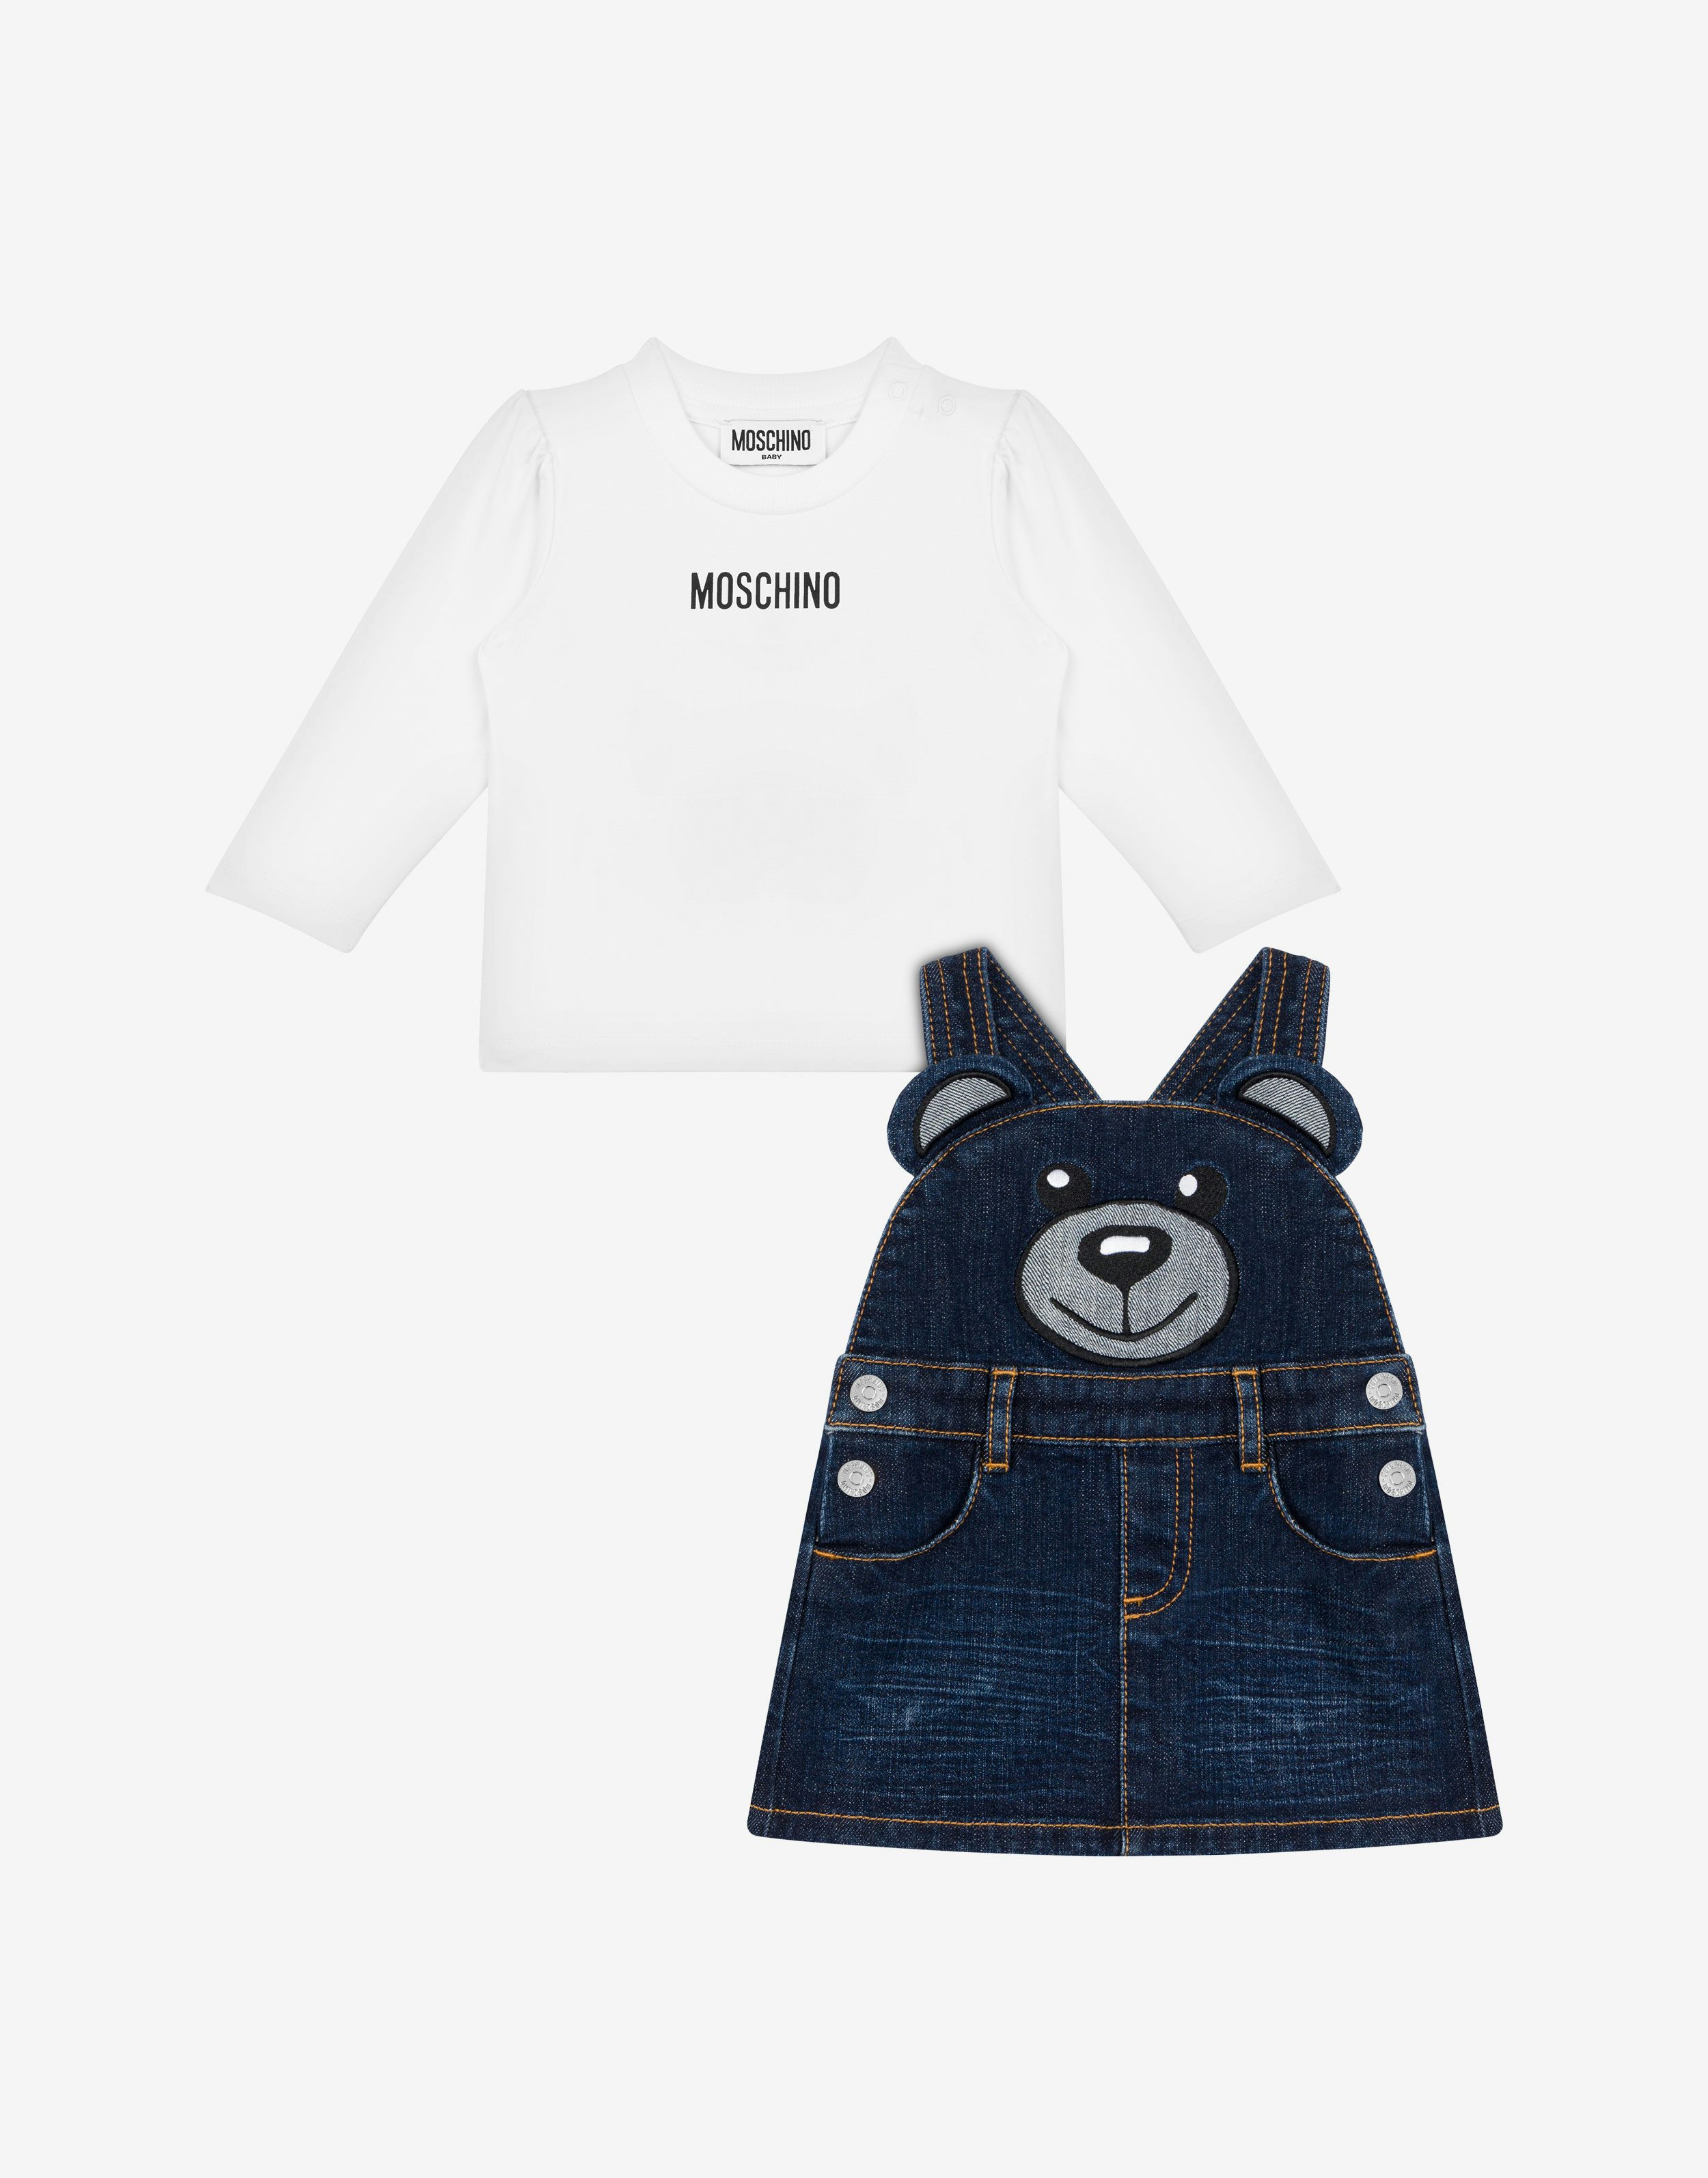 Moschino Teddy Bear T-shirt And Dungaree Skirt Co-ord Set